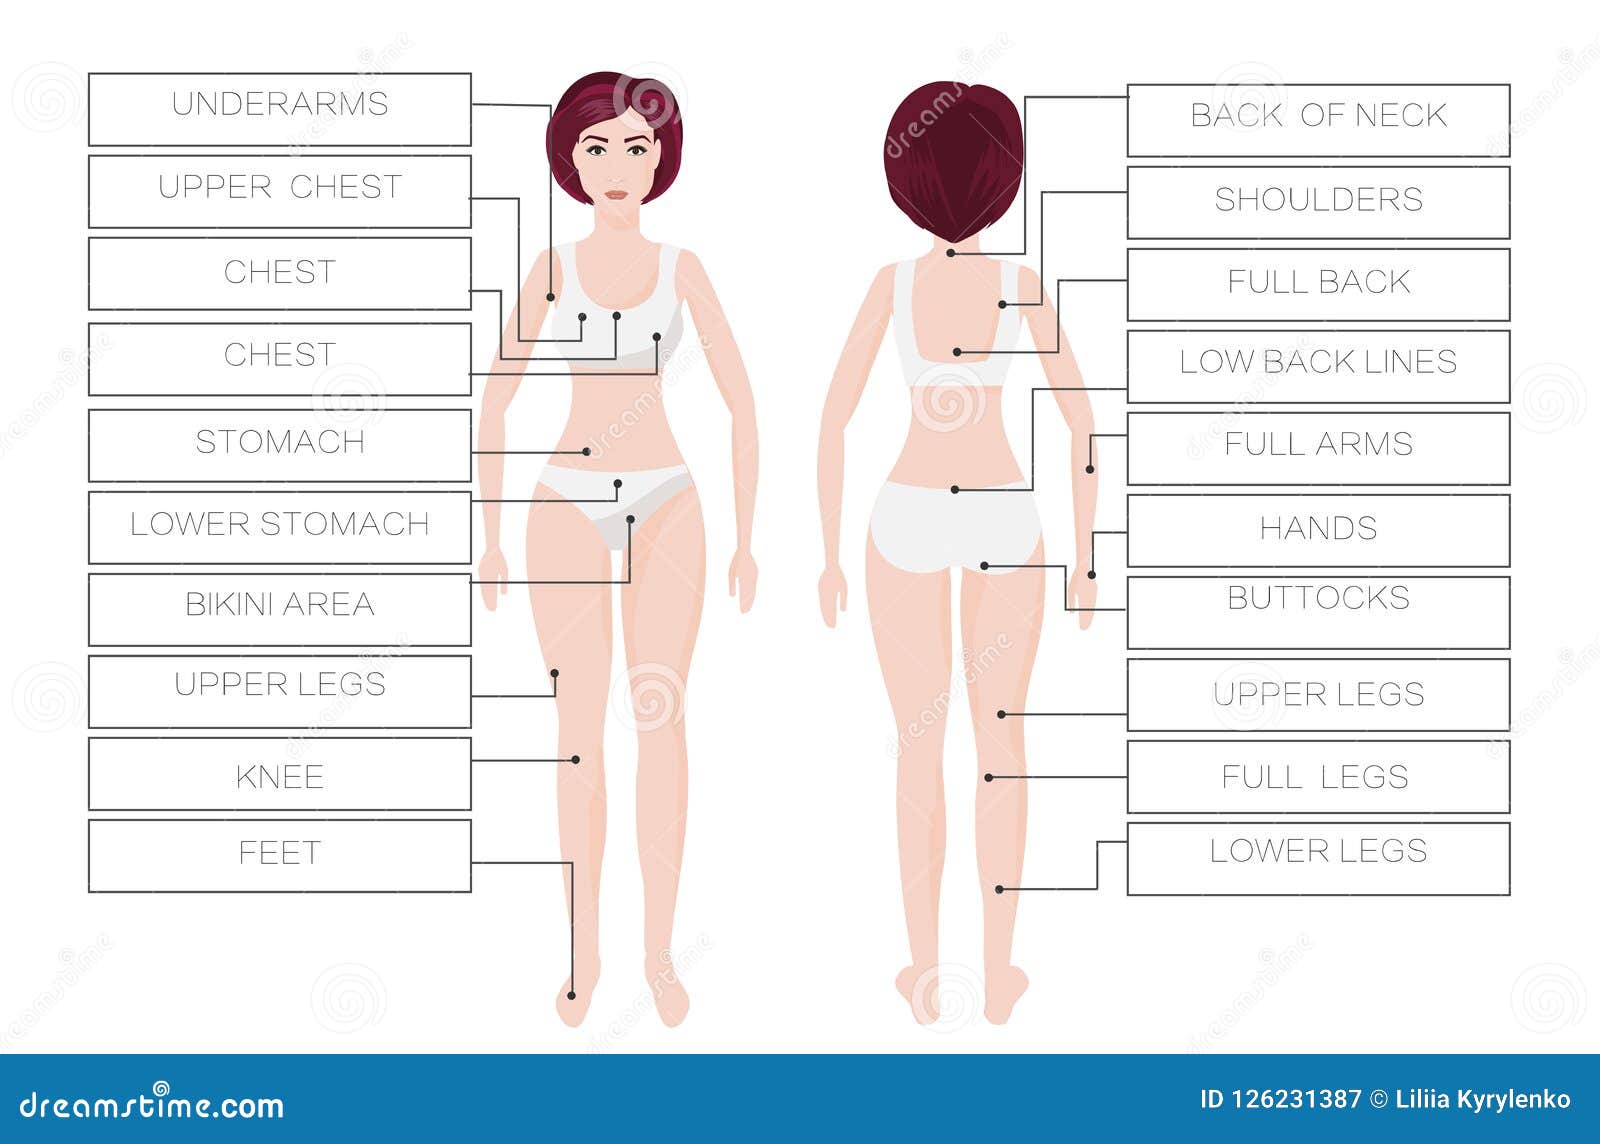 laser hair removal female zones. area body woman. ipl procedure